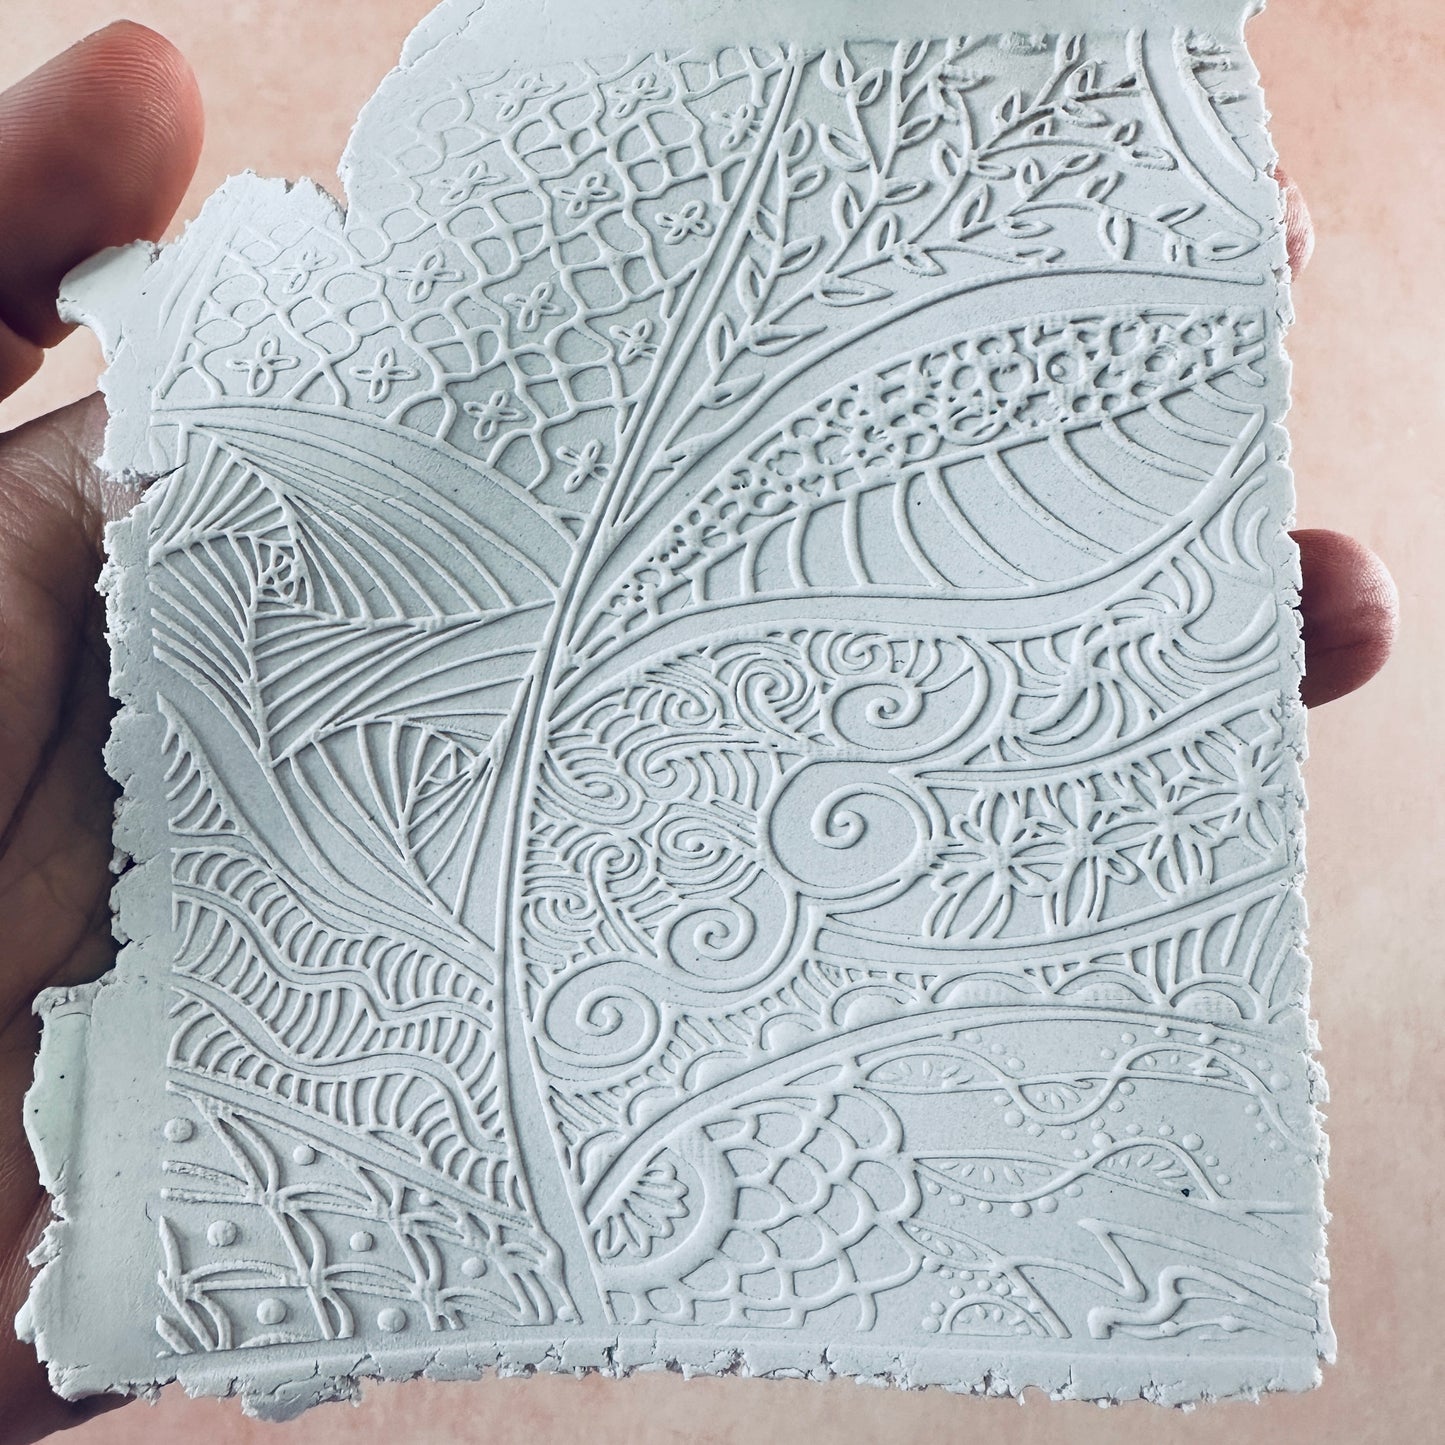 Zen Garden Texture Mat rubber Stamp for polymer clay paper Gelli plate and resin ZIA zentangle inspired